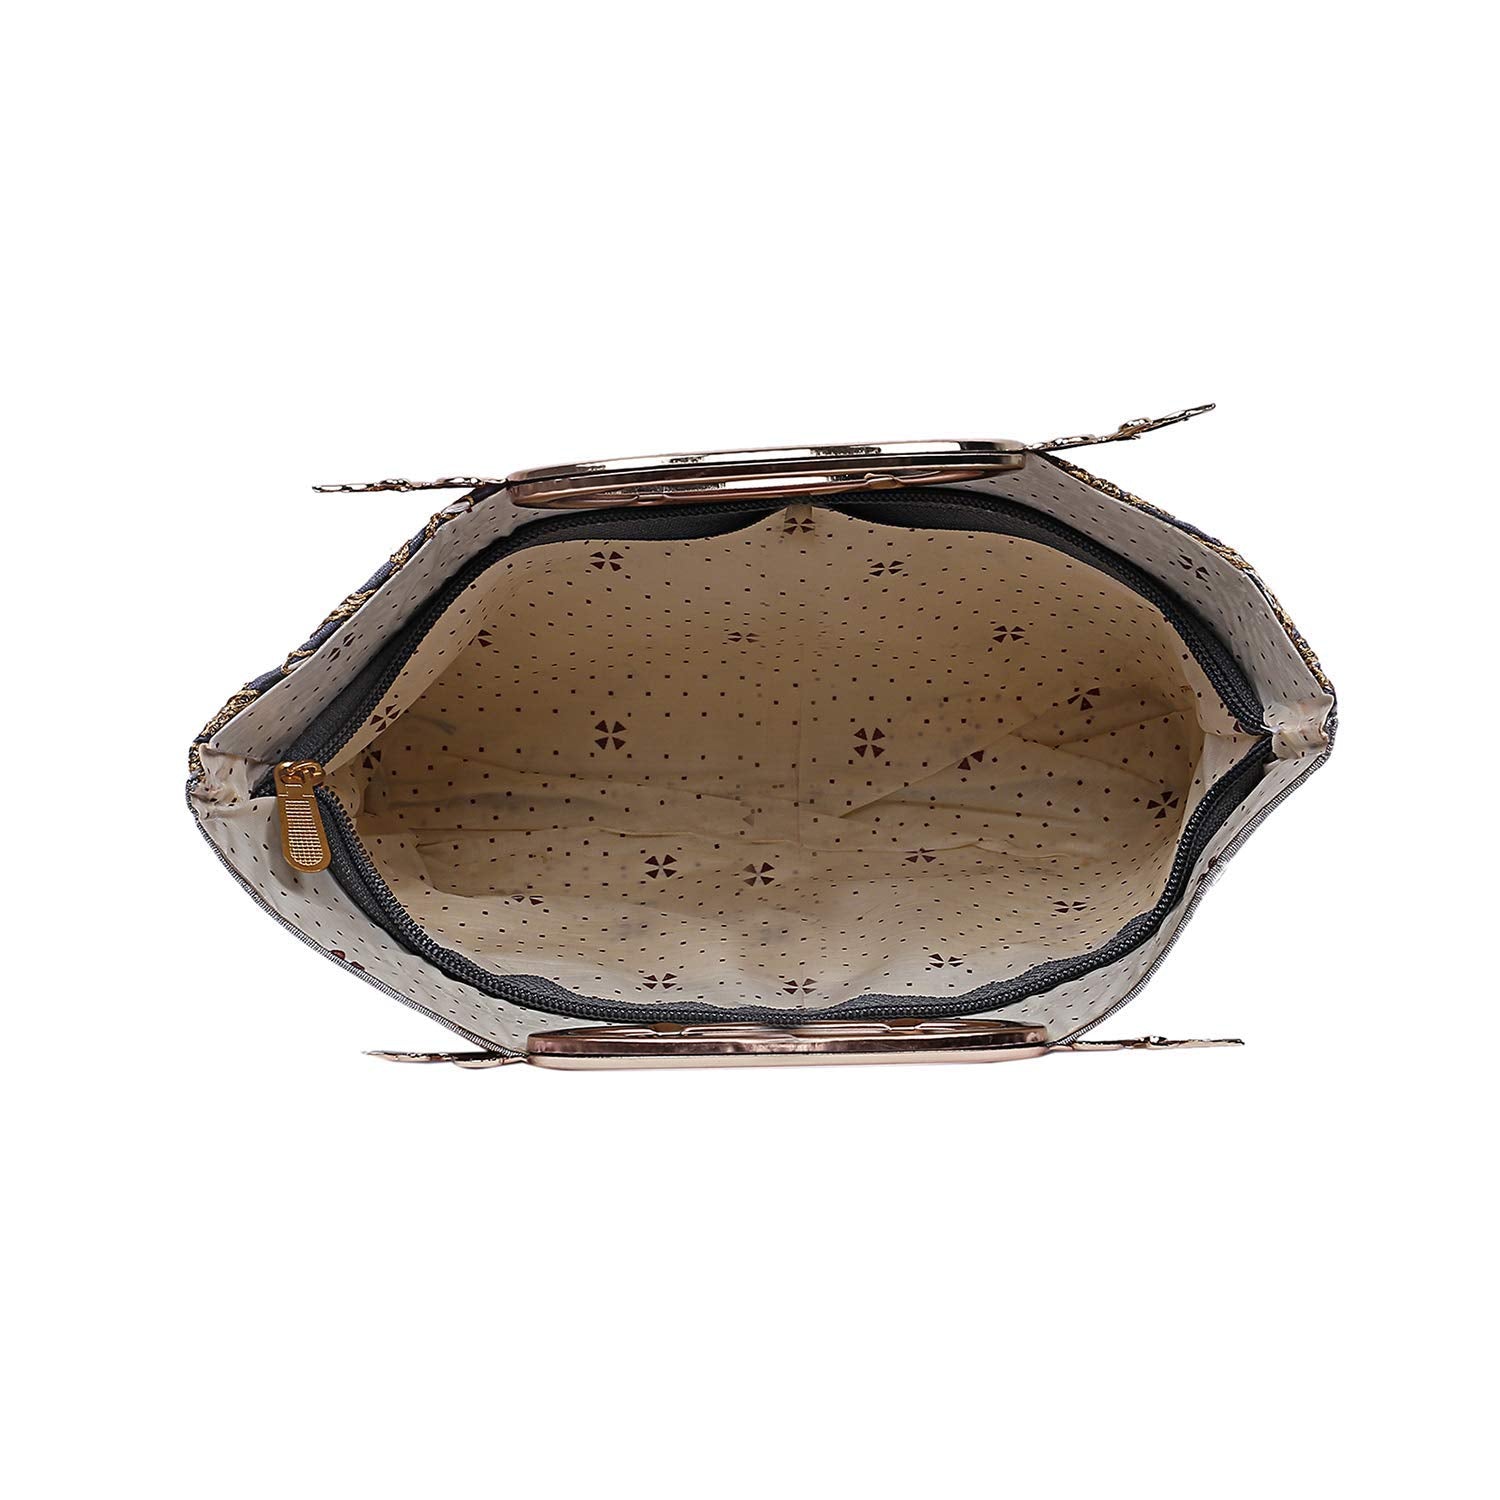 Heart Home Women's Silk Clutch Handbag (Grey) - CTHH11276